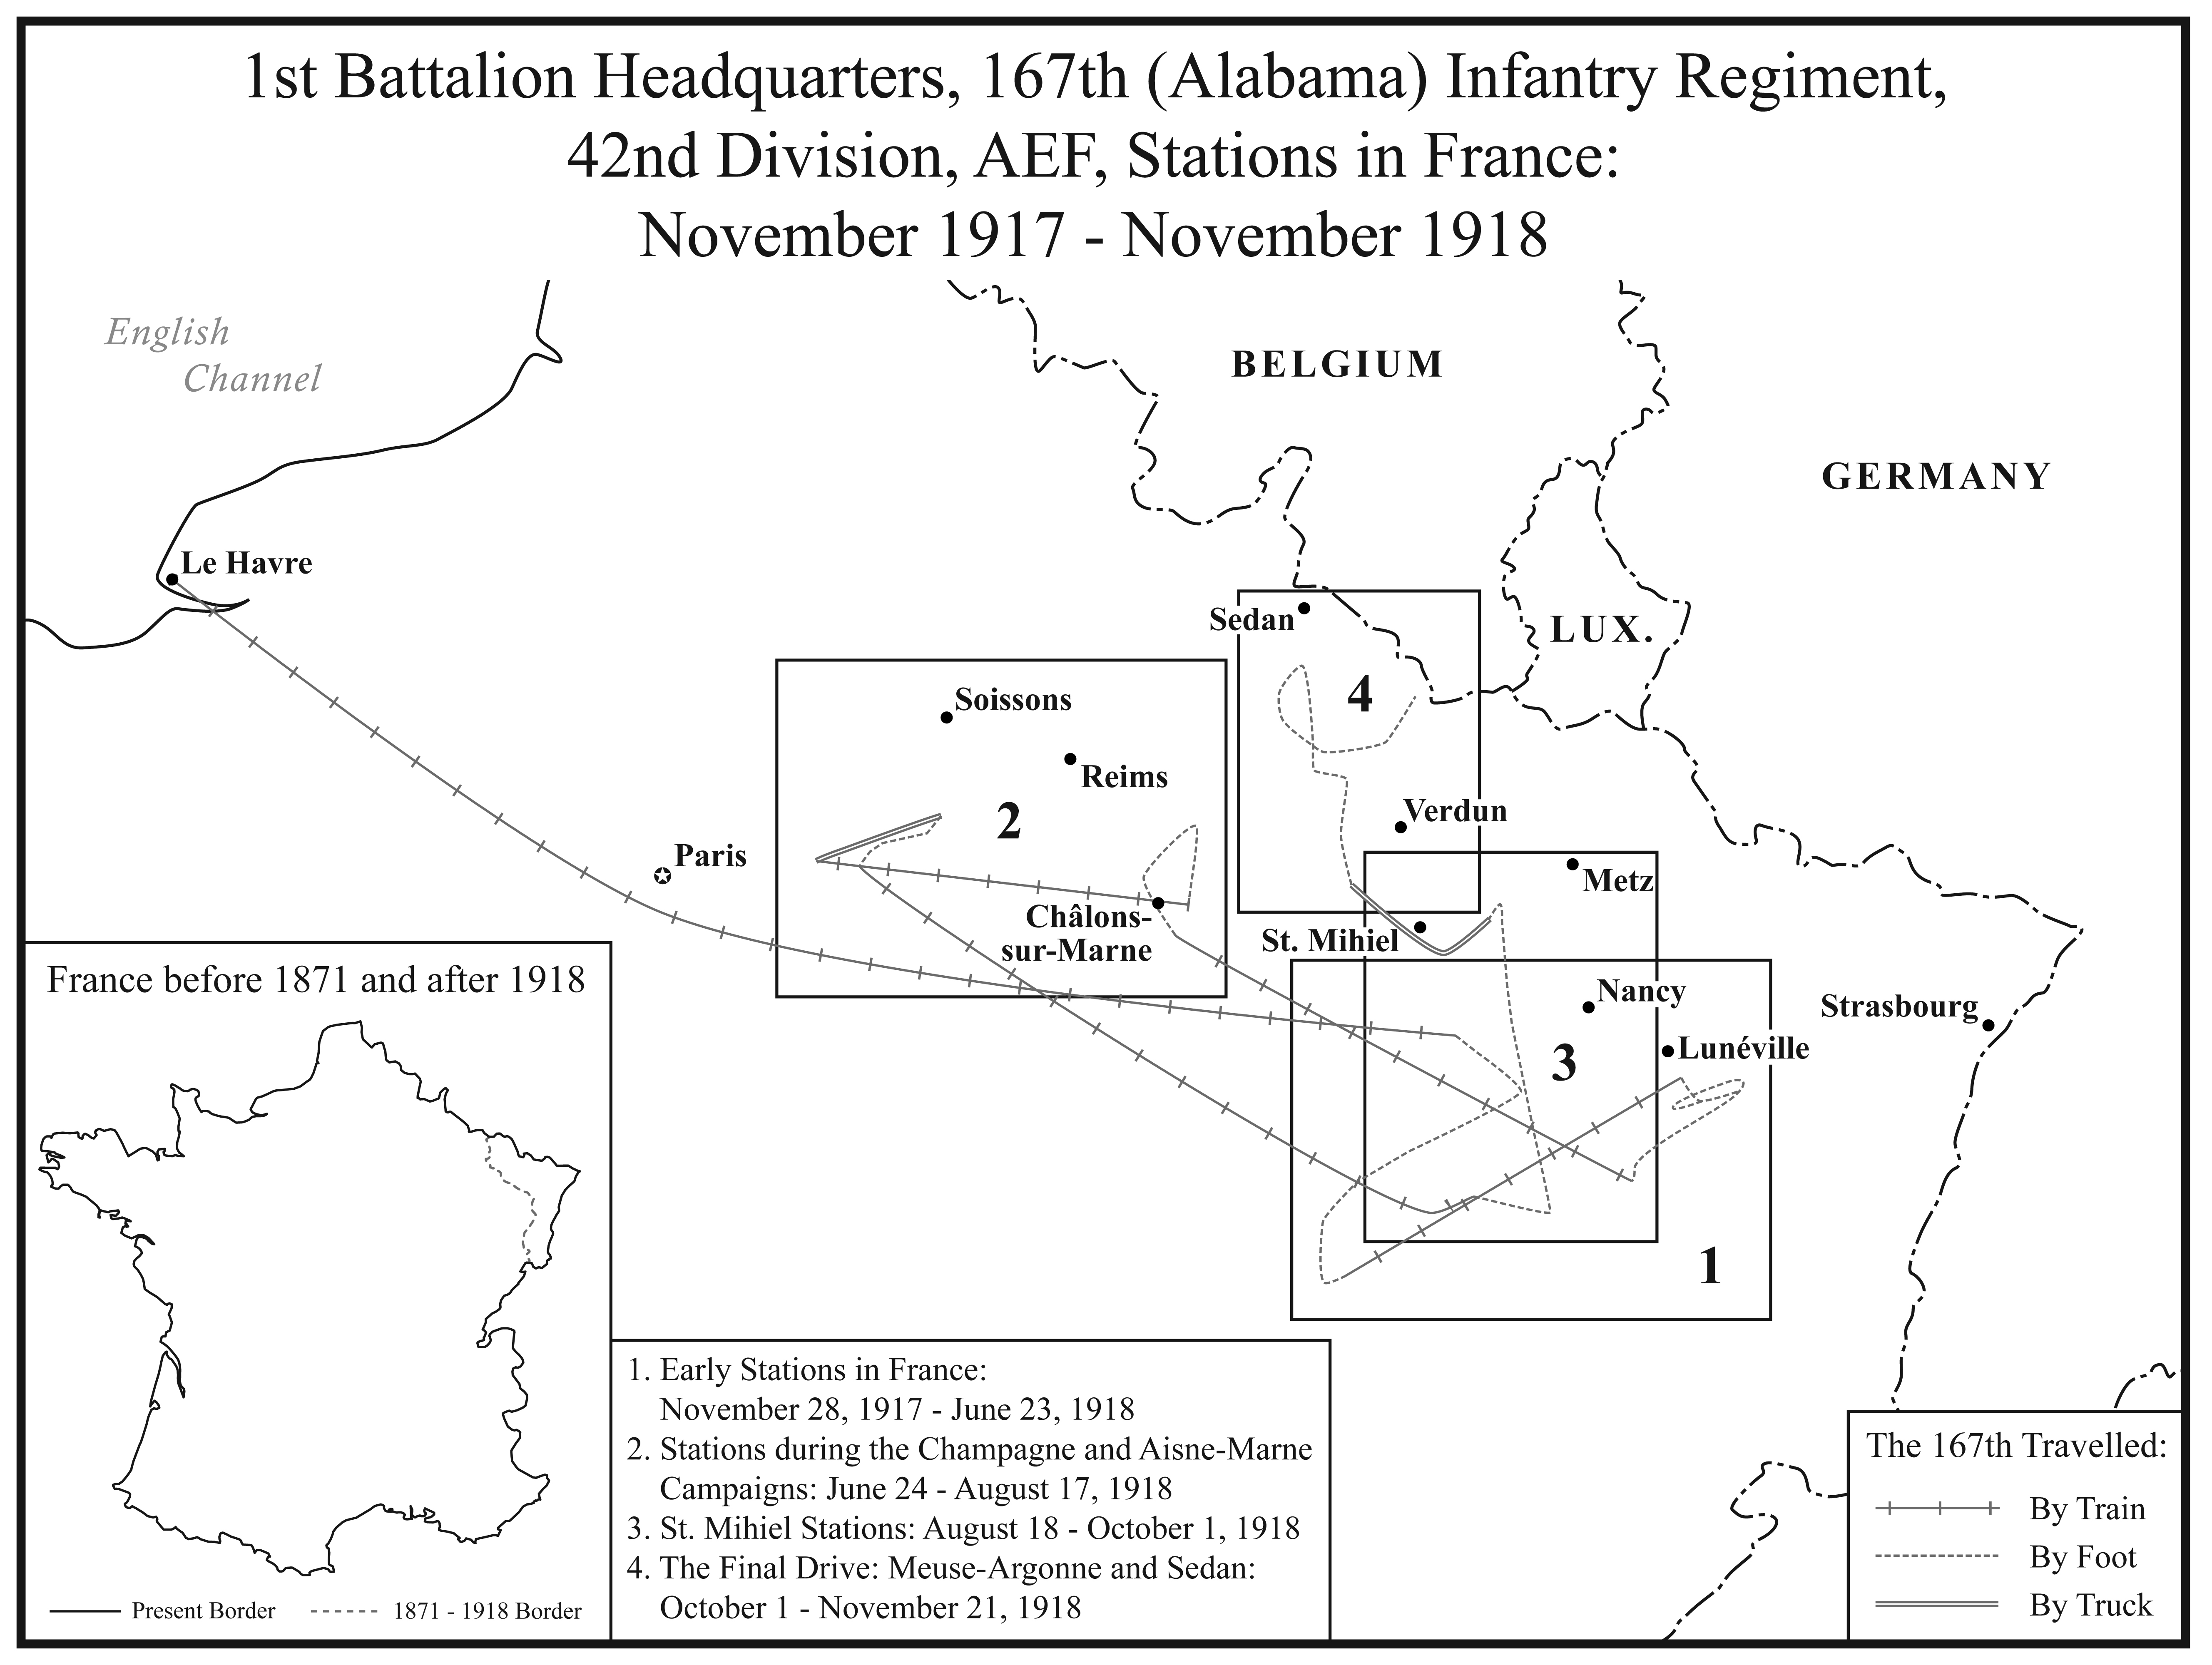 I. 1st Battalion Headquarters, 167th Alabama Regiment Stations in France.